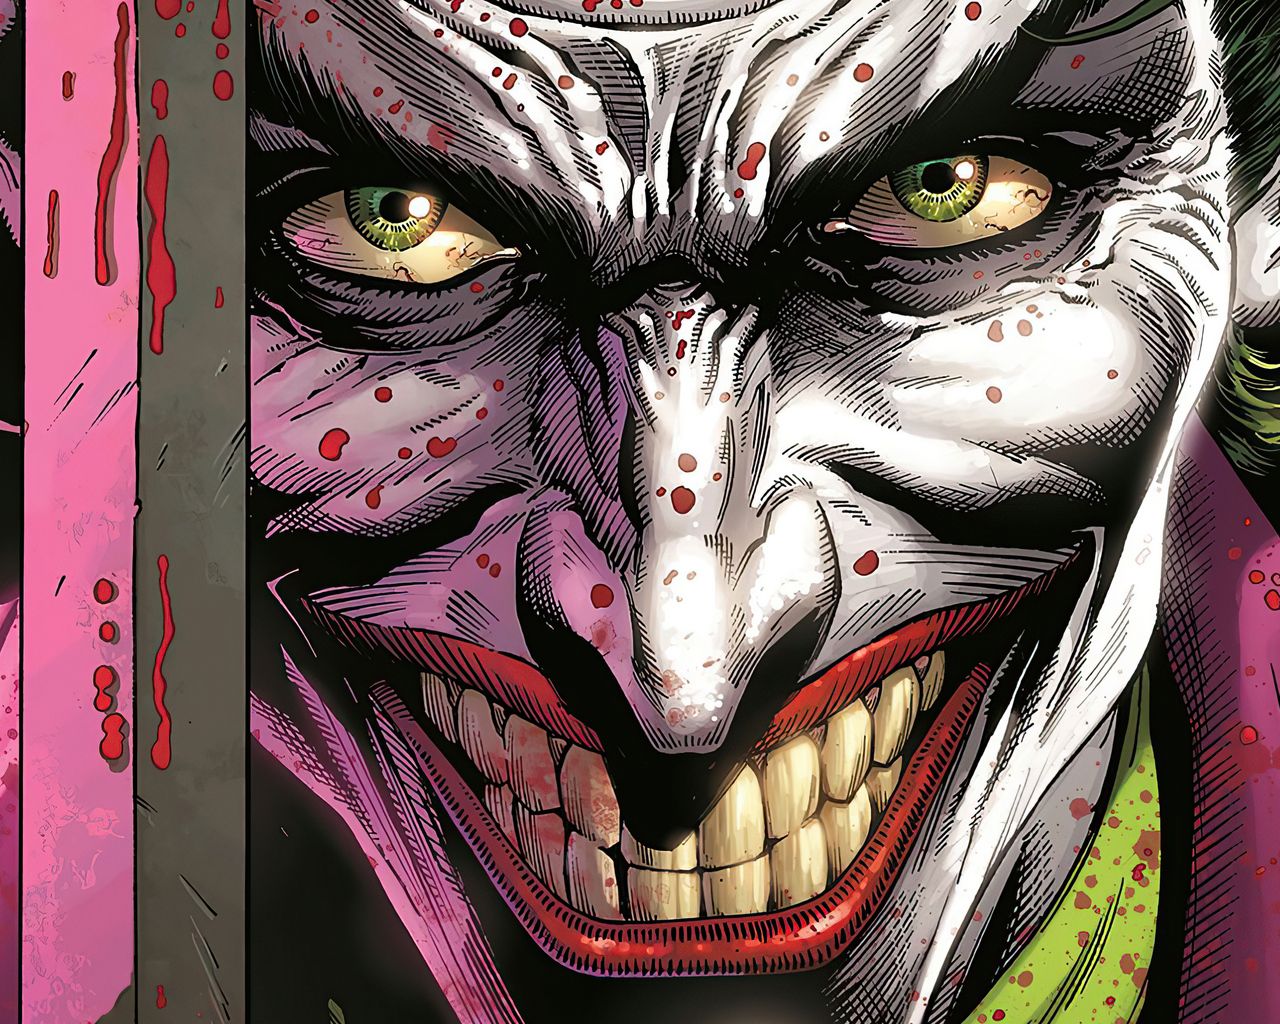 Joker Devil Smile 4k 1280x1024 Resolution HD 4k Wallpaper, Image, Background, Photo and Picture